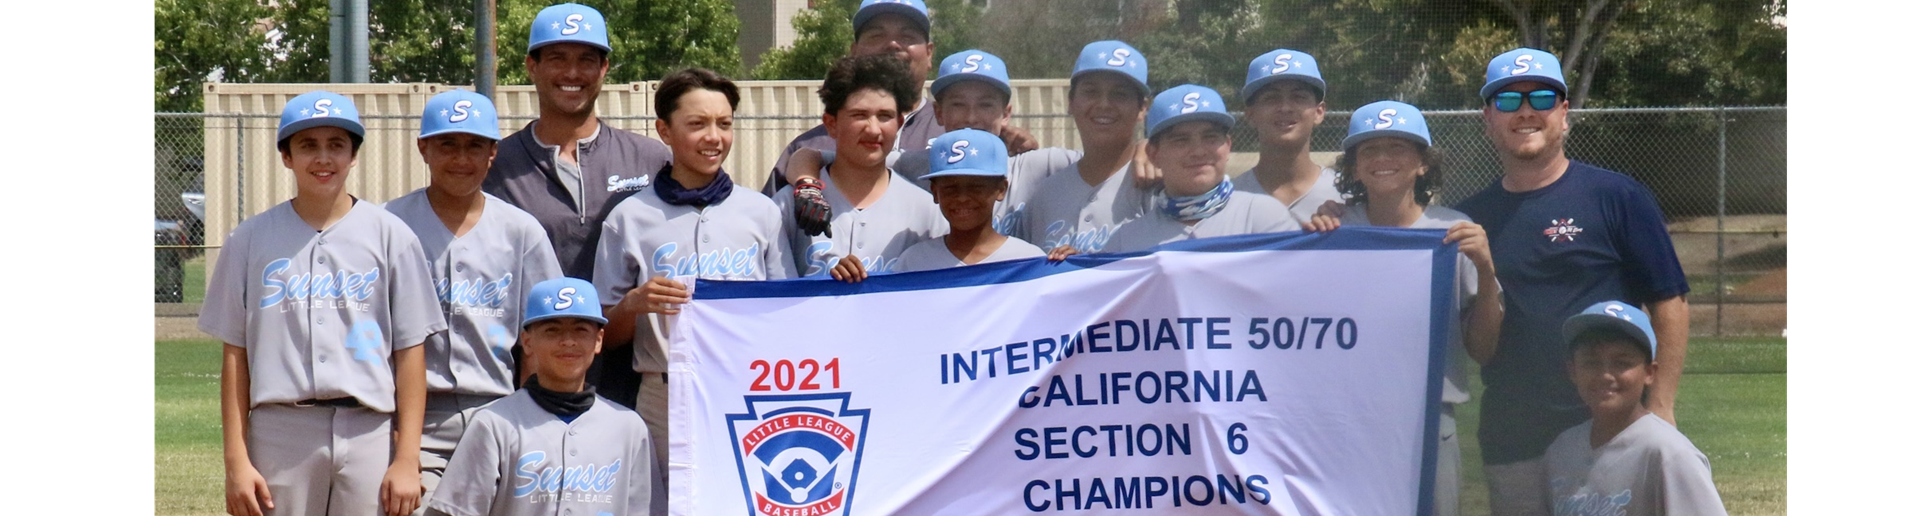 2021 Intermediate California Section 6 Champions